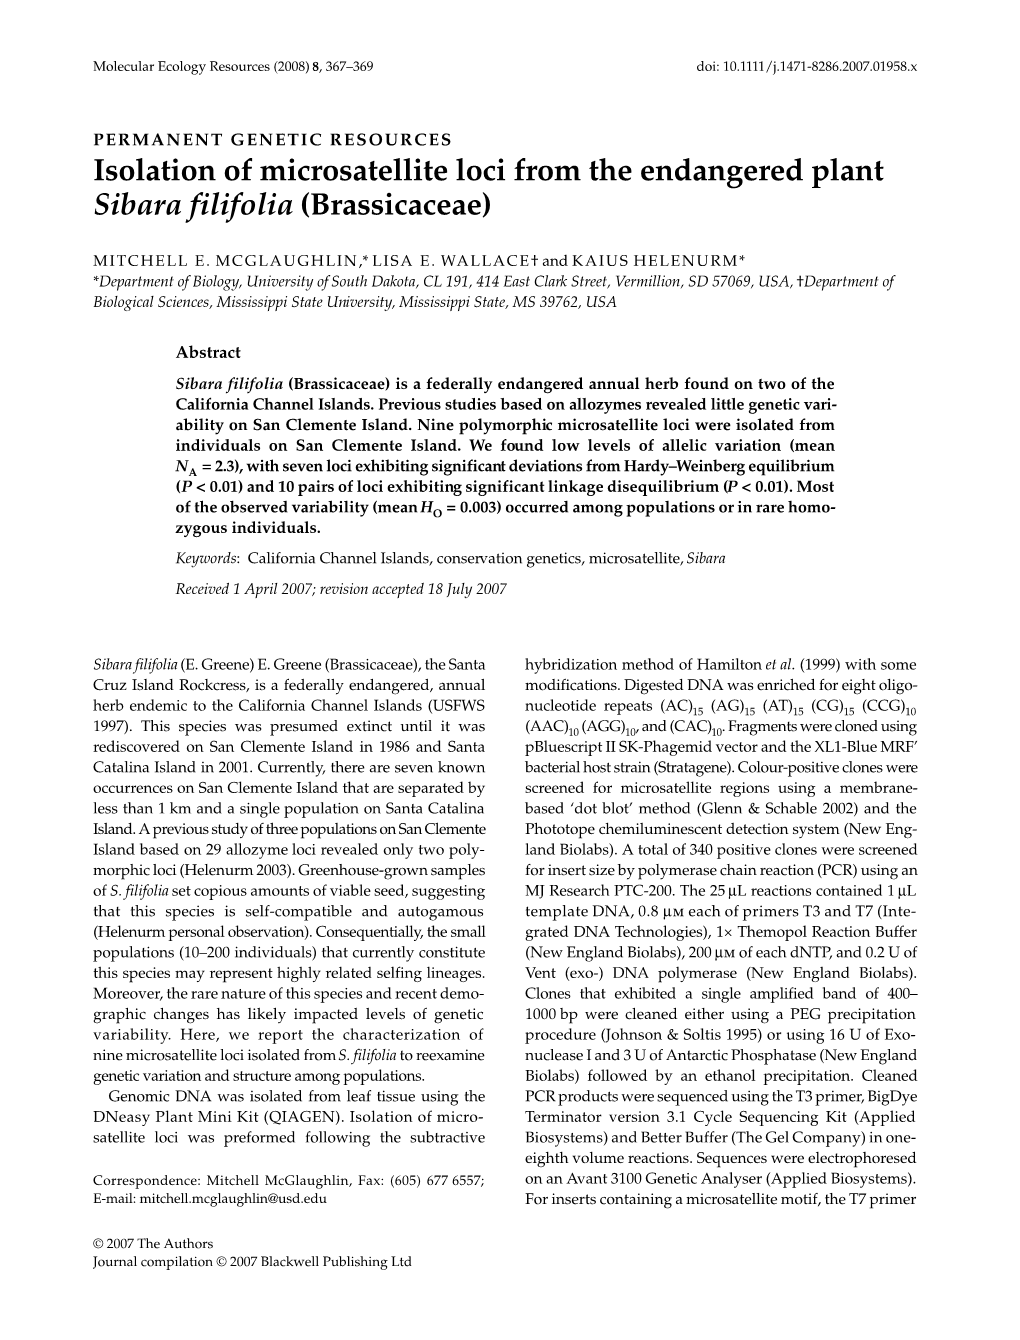 Isolation of Microsatellite Loci from the Endangered Plant Sibara Filifolia (Brassicaceae)